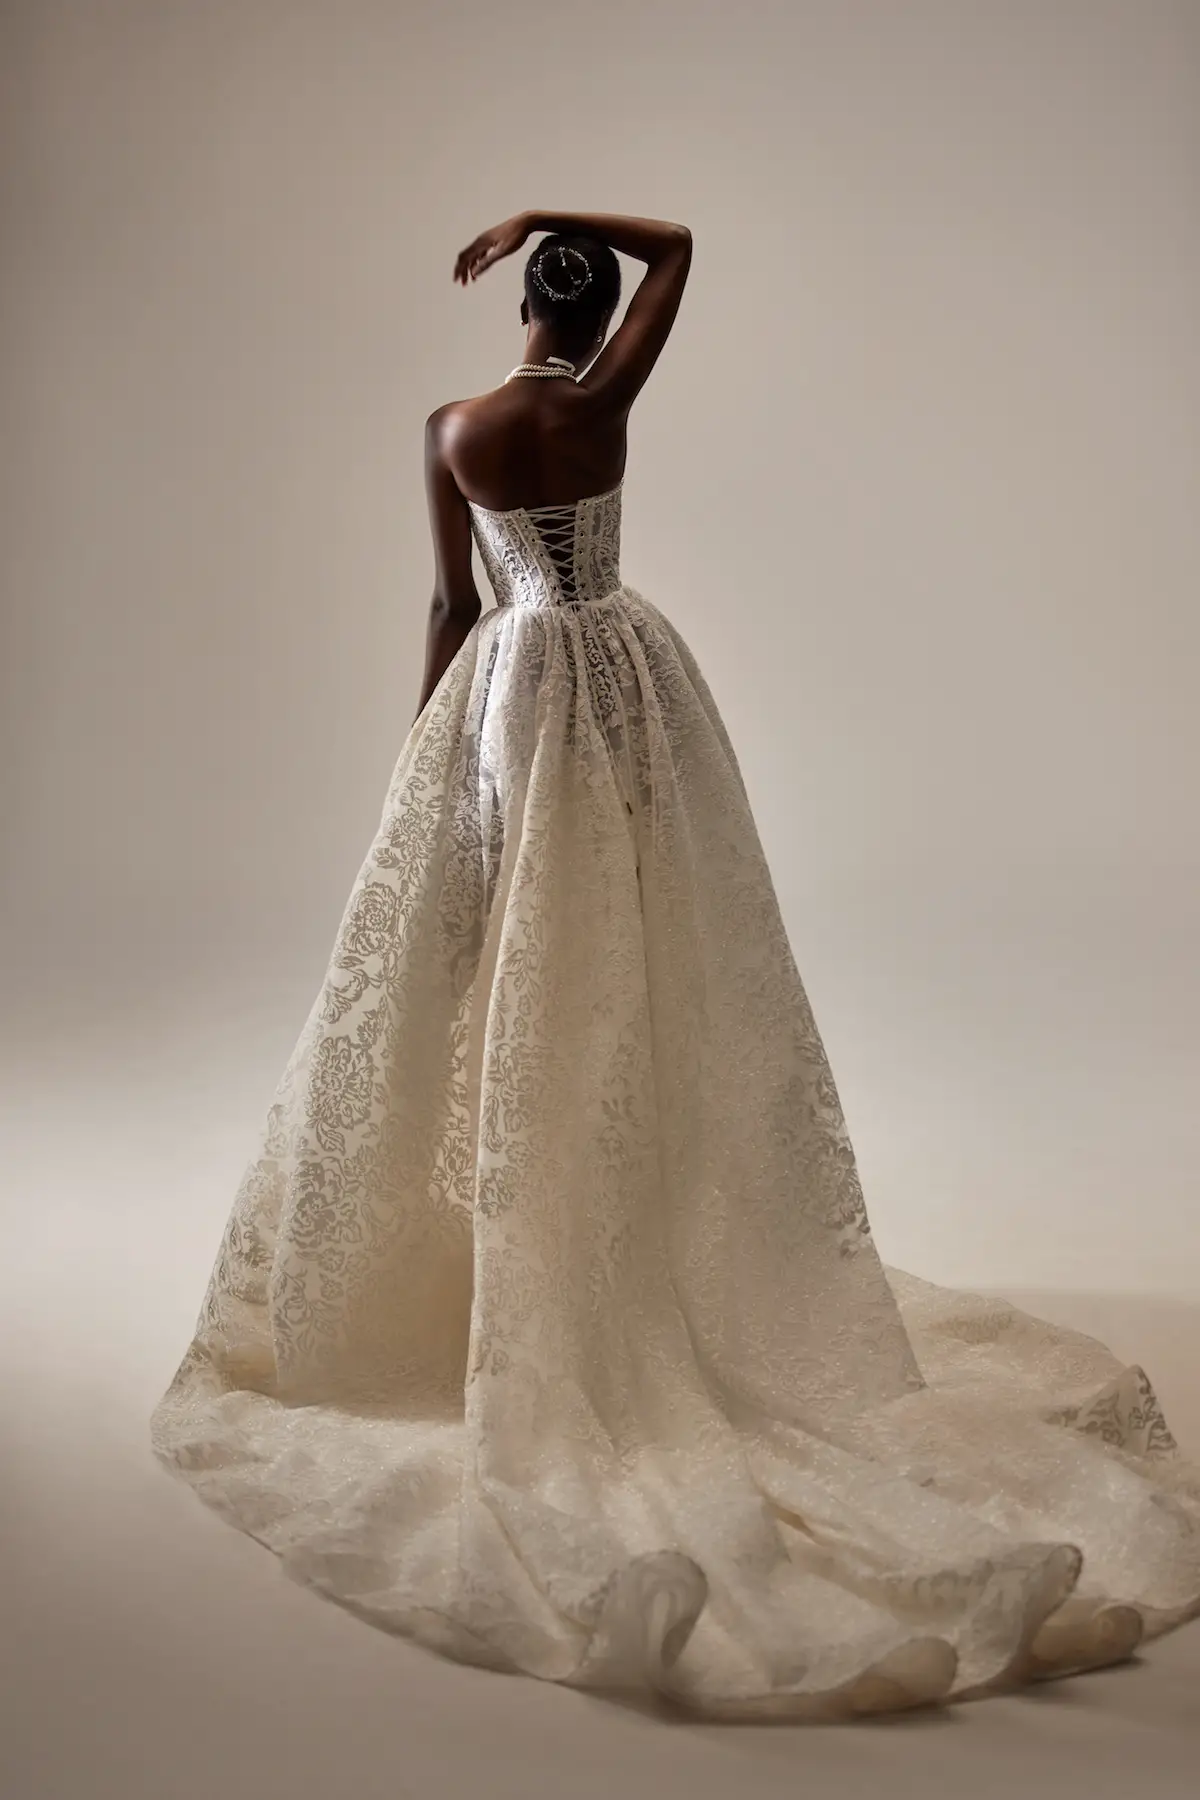 Lace princess Wedding Dress by Milla Nova - Vitalia white lace